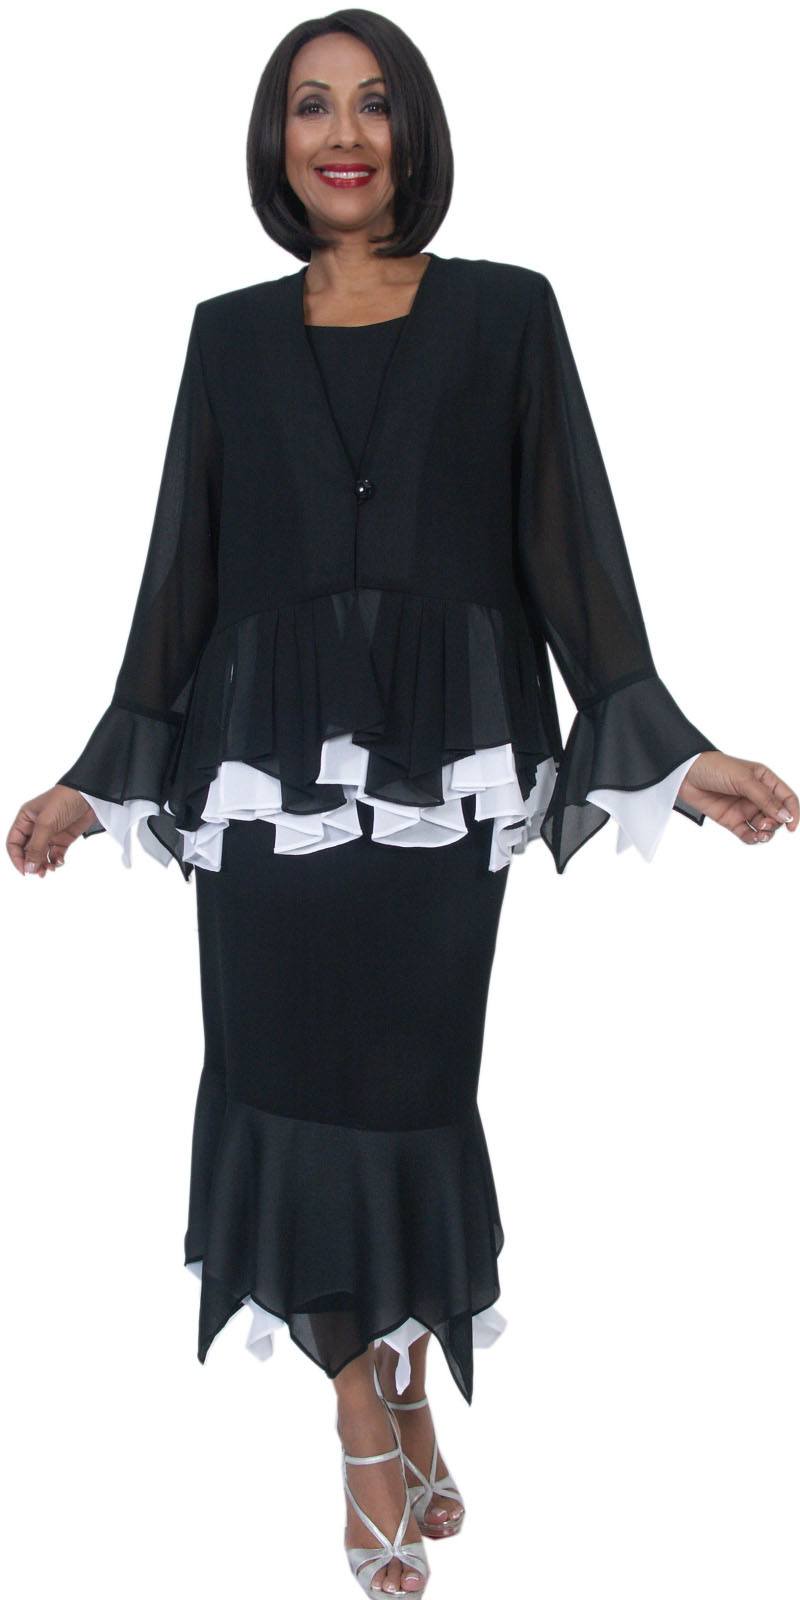 Hosanna 5279 Plus Size 3 Piece Set Black/White Ankle Length Dress